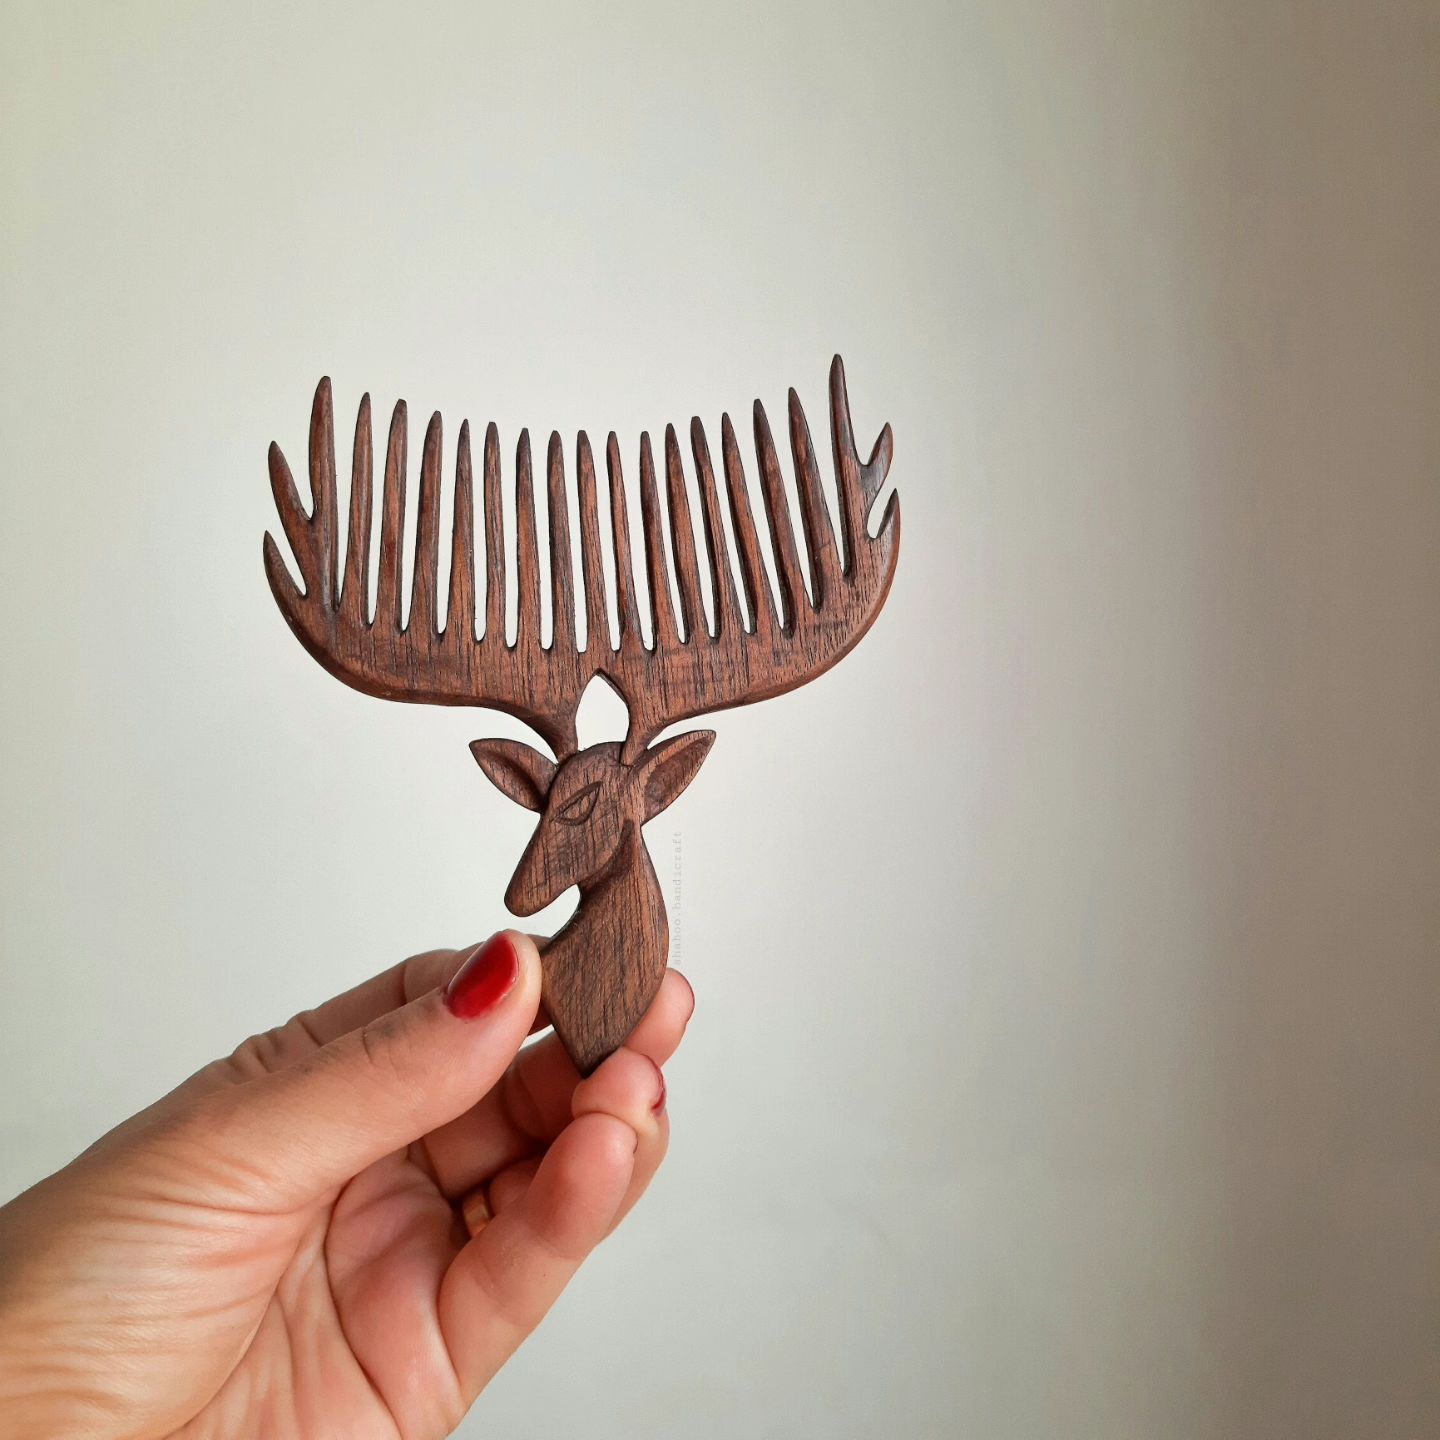 Benefits of Wooden Comb: Customizable